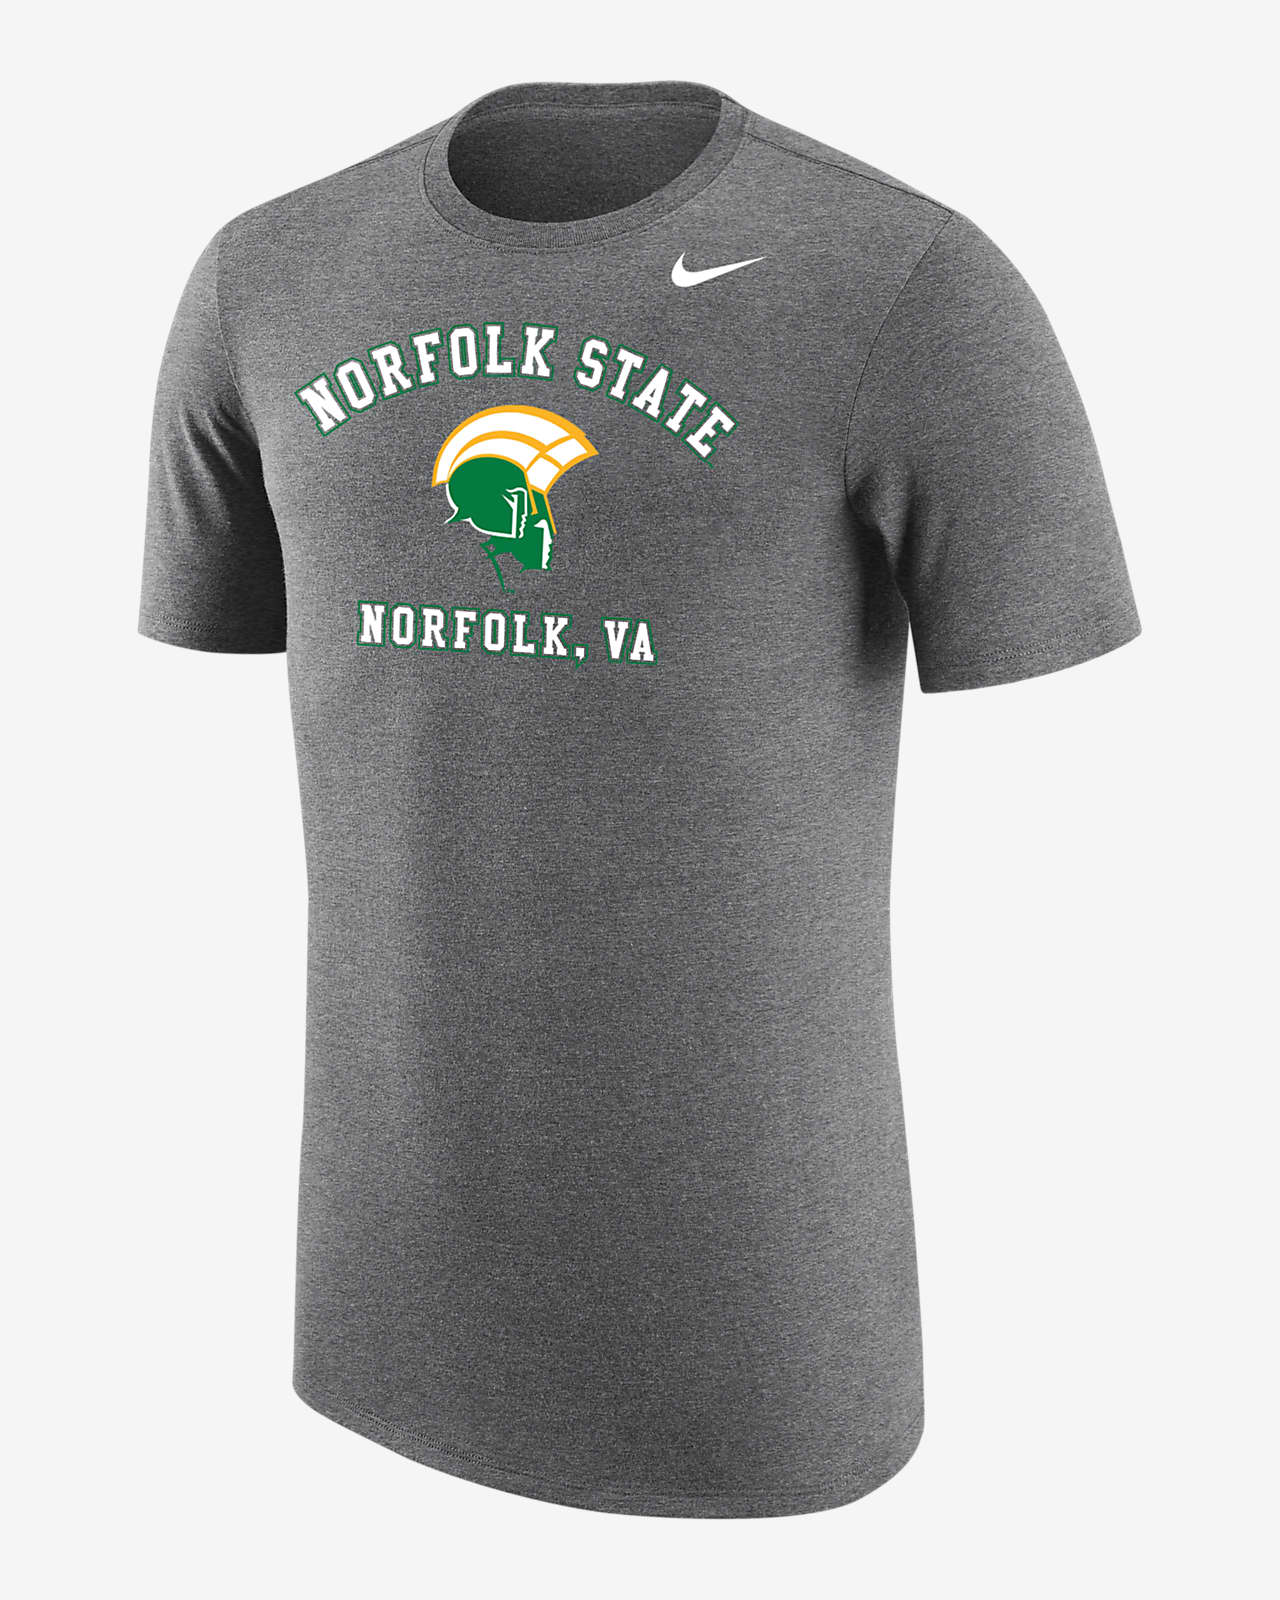 Norfolk State Men's Nike College T-Shirt